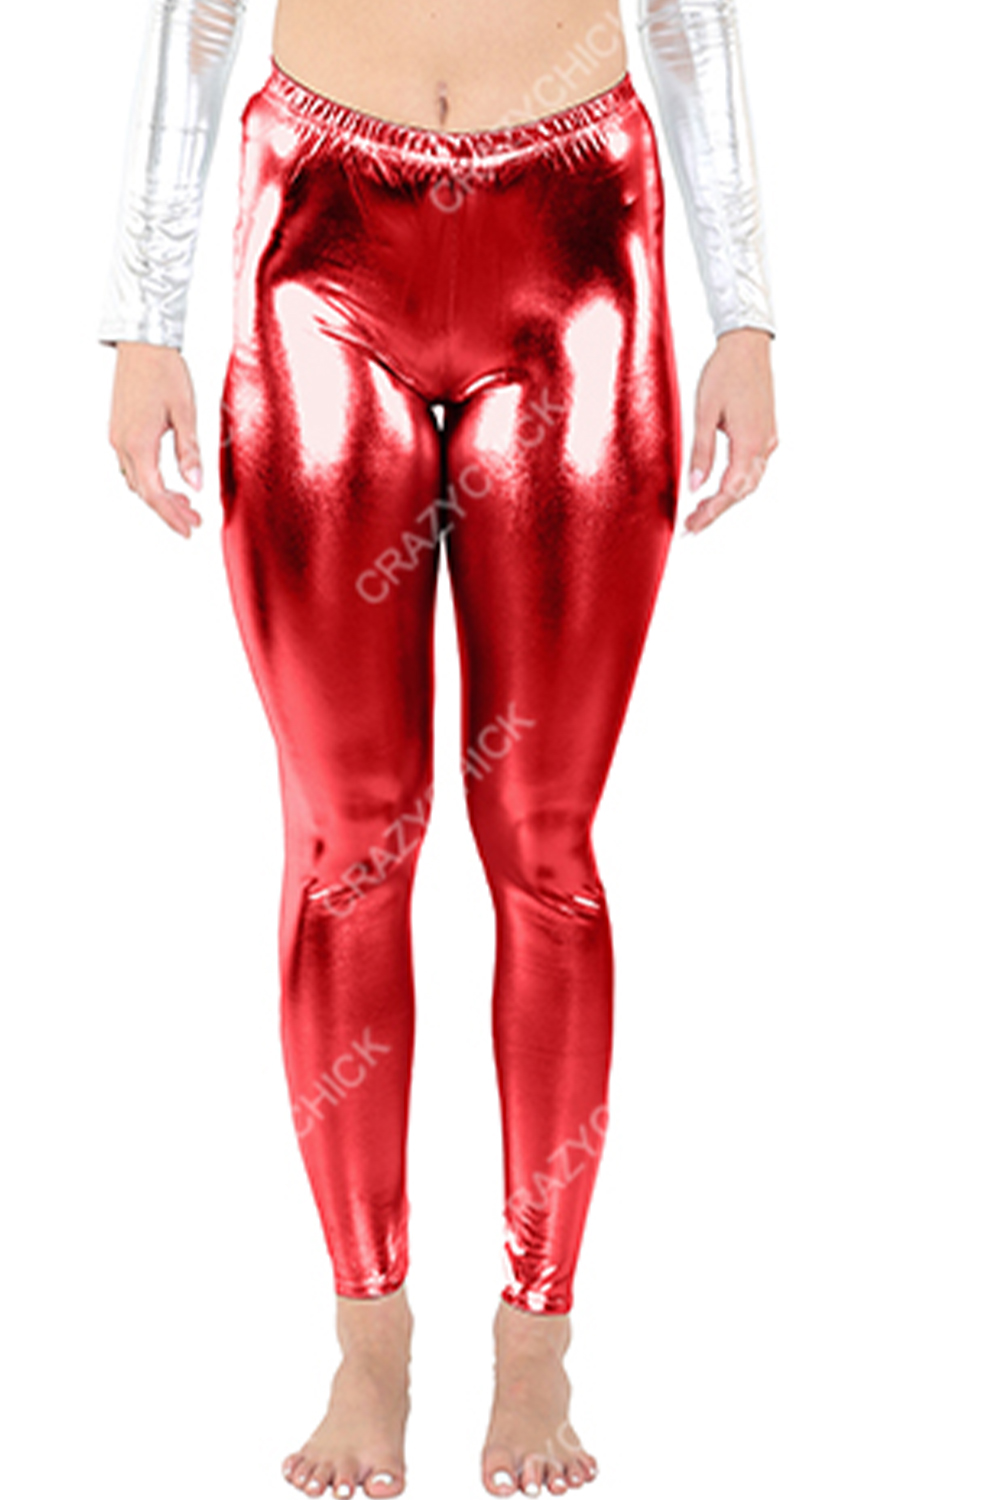 Crazy Chick Adult Luxury Red Shiny Metallic Leggings